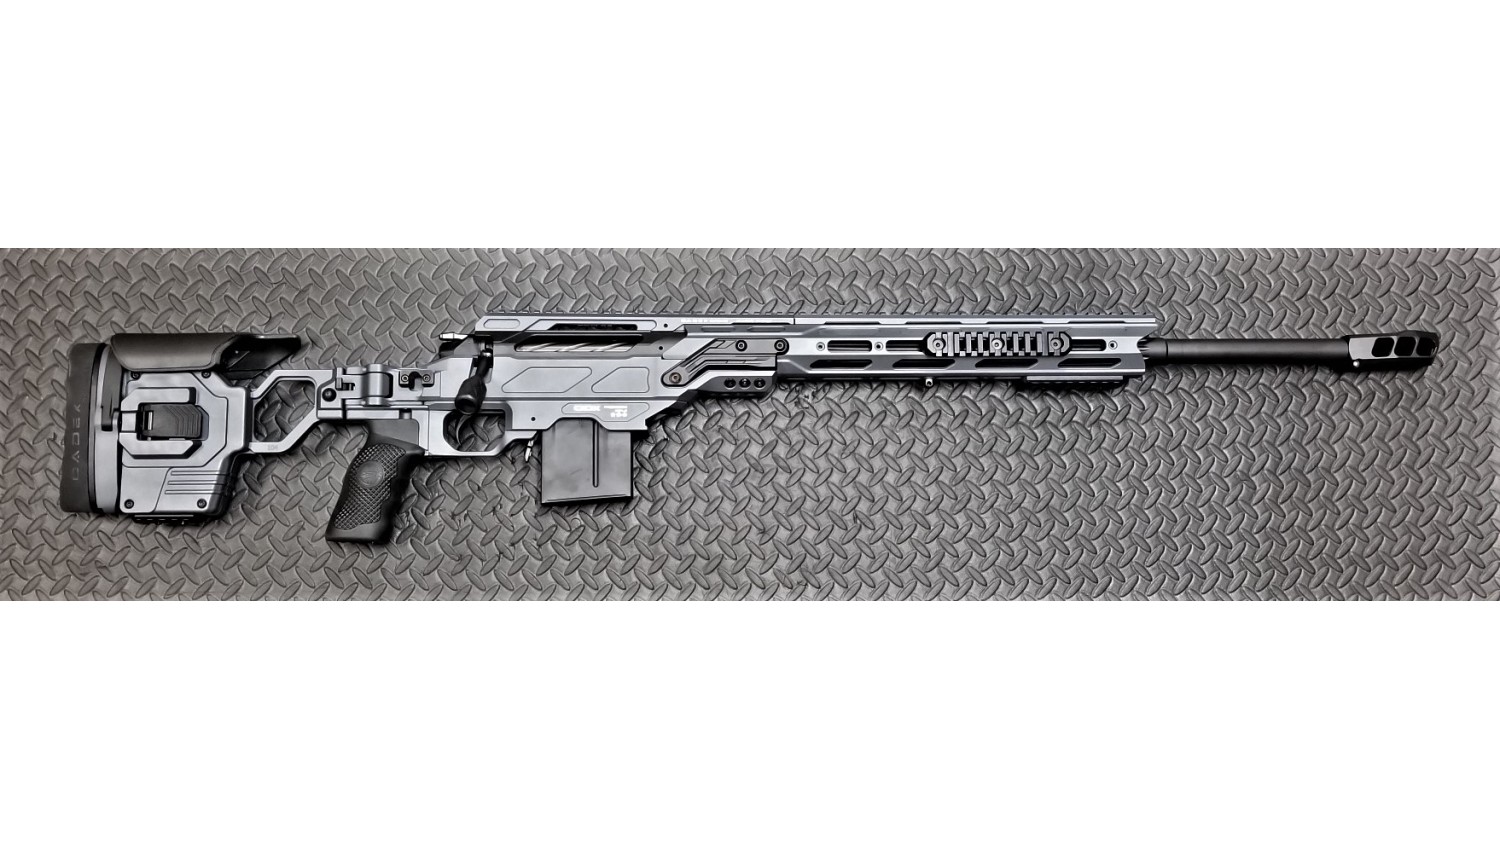 USED Cadex Defense CDX-30 GUARDIAN Rifle - 6.5 Creedmoor, 26, 1-8 Twist,  Hybrid Shadow Stealth, DX2 Trigger, Oversized Cross Hatch Bolt Knob, 10rds,  Skeleton Buttstock, 20 MOA Rail, With MX1 Muzzle Brake.